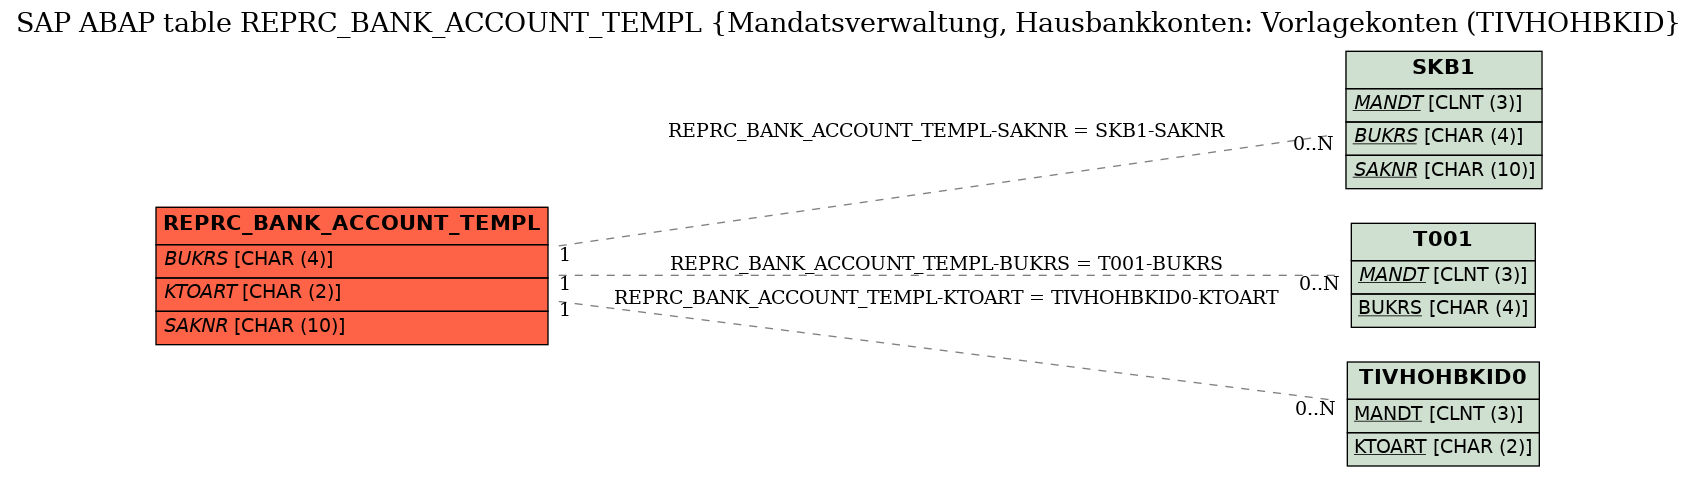 E-R Diagram for table REPRC_BANK_ACCOUNT_TEMPL (Mandatsverwaltung, Hausbankkonten: Vorlagekonten (TIVHOHBKID)